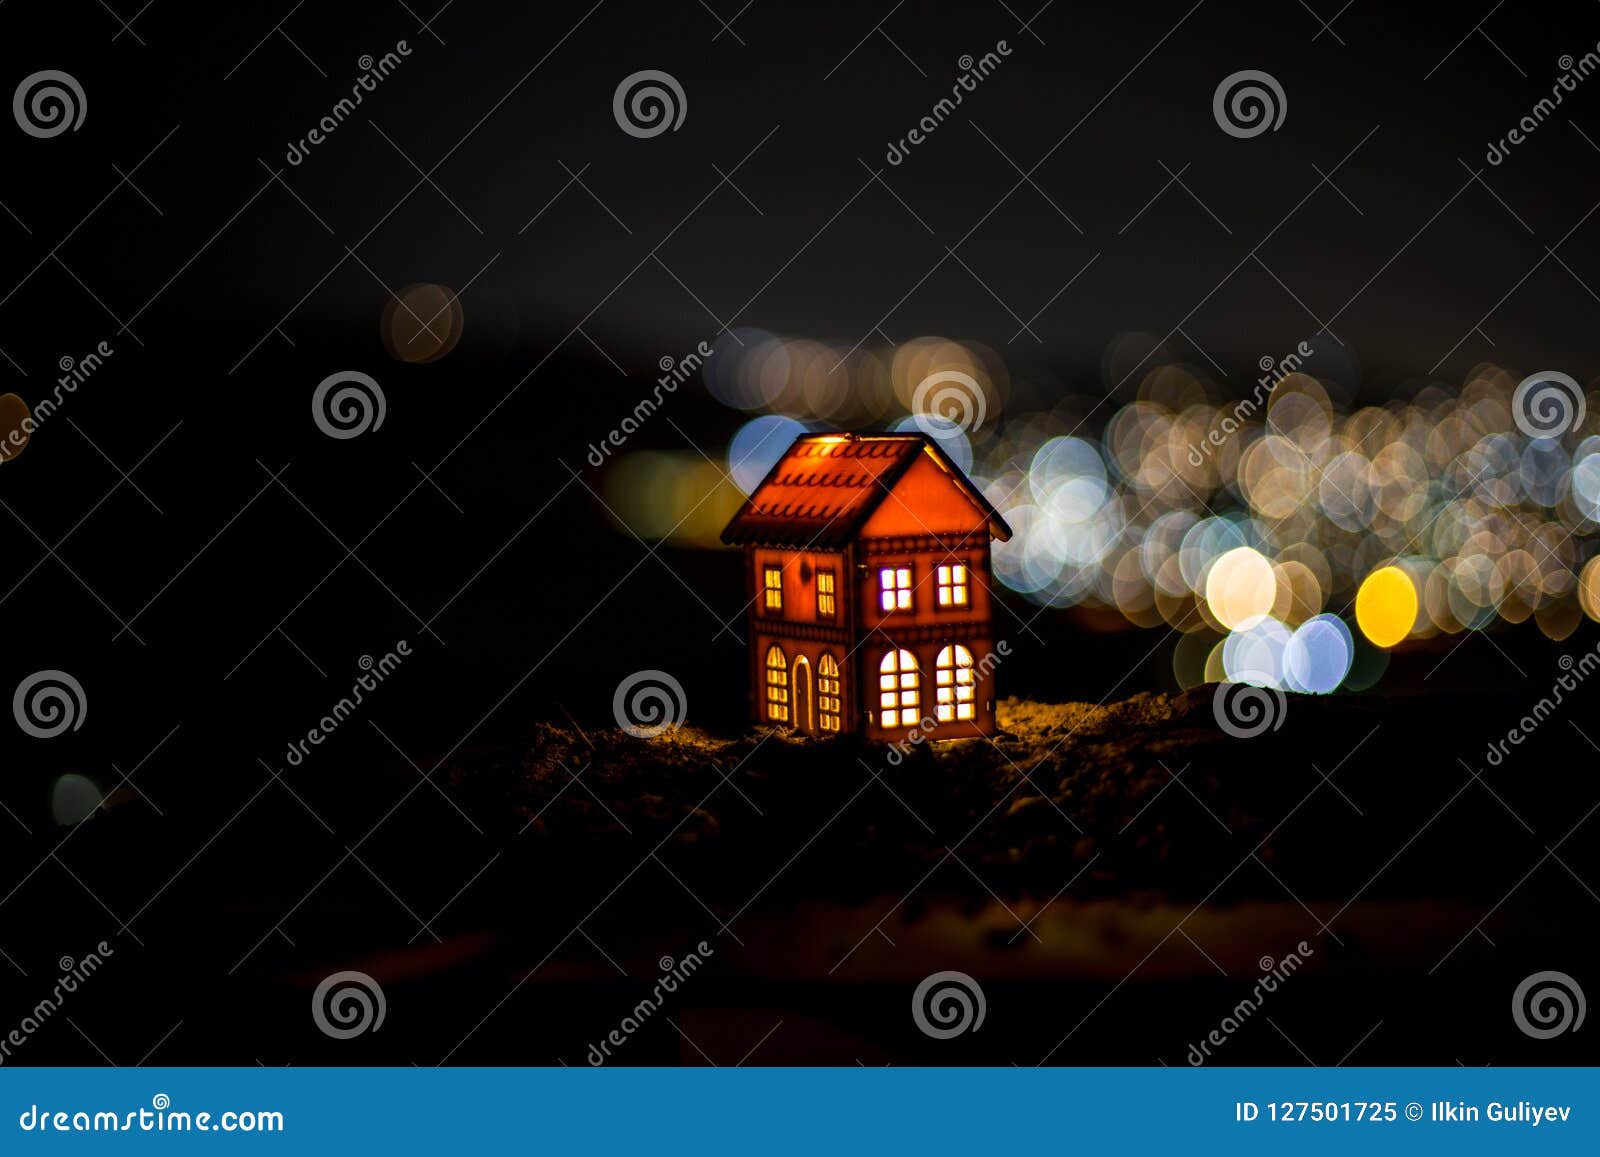 Little Decorative House, Beautiful Festive Still Life, Cute Small House ...